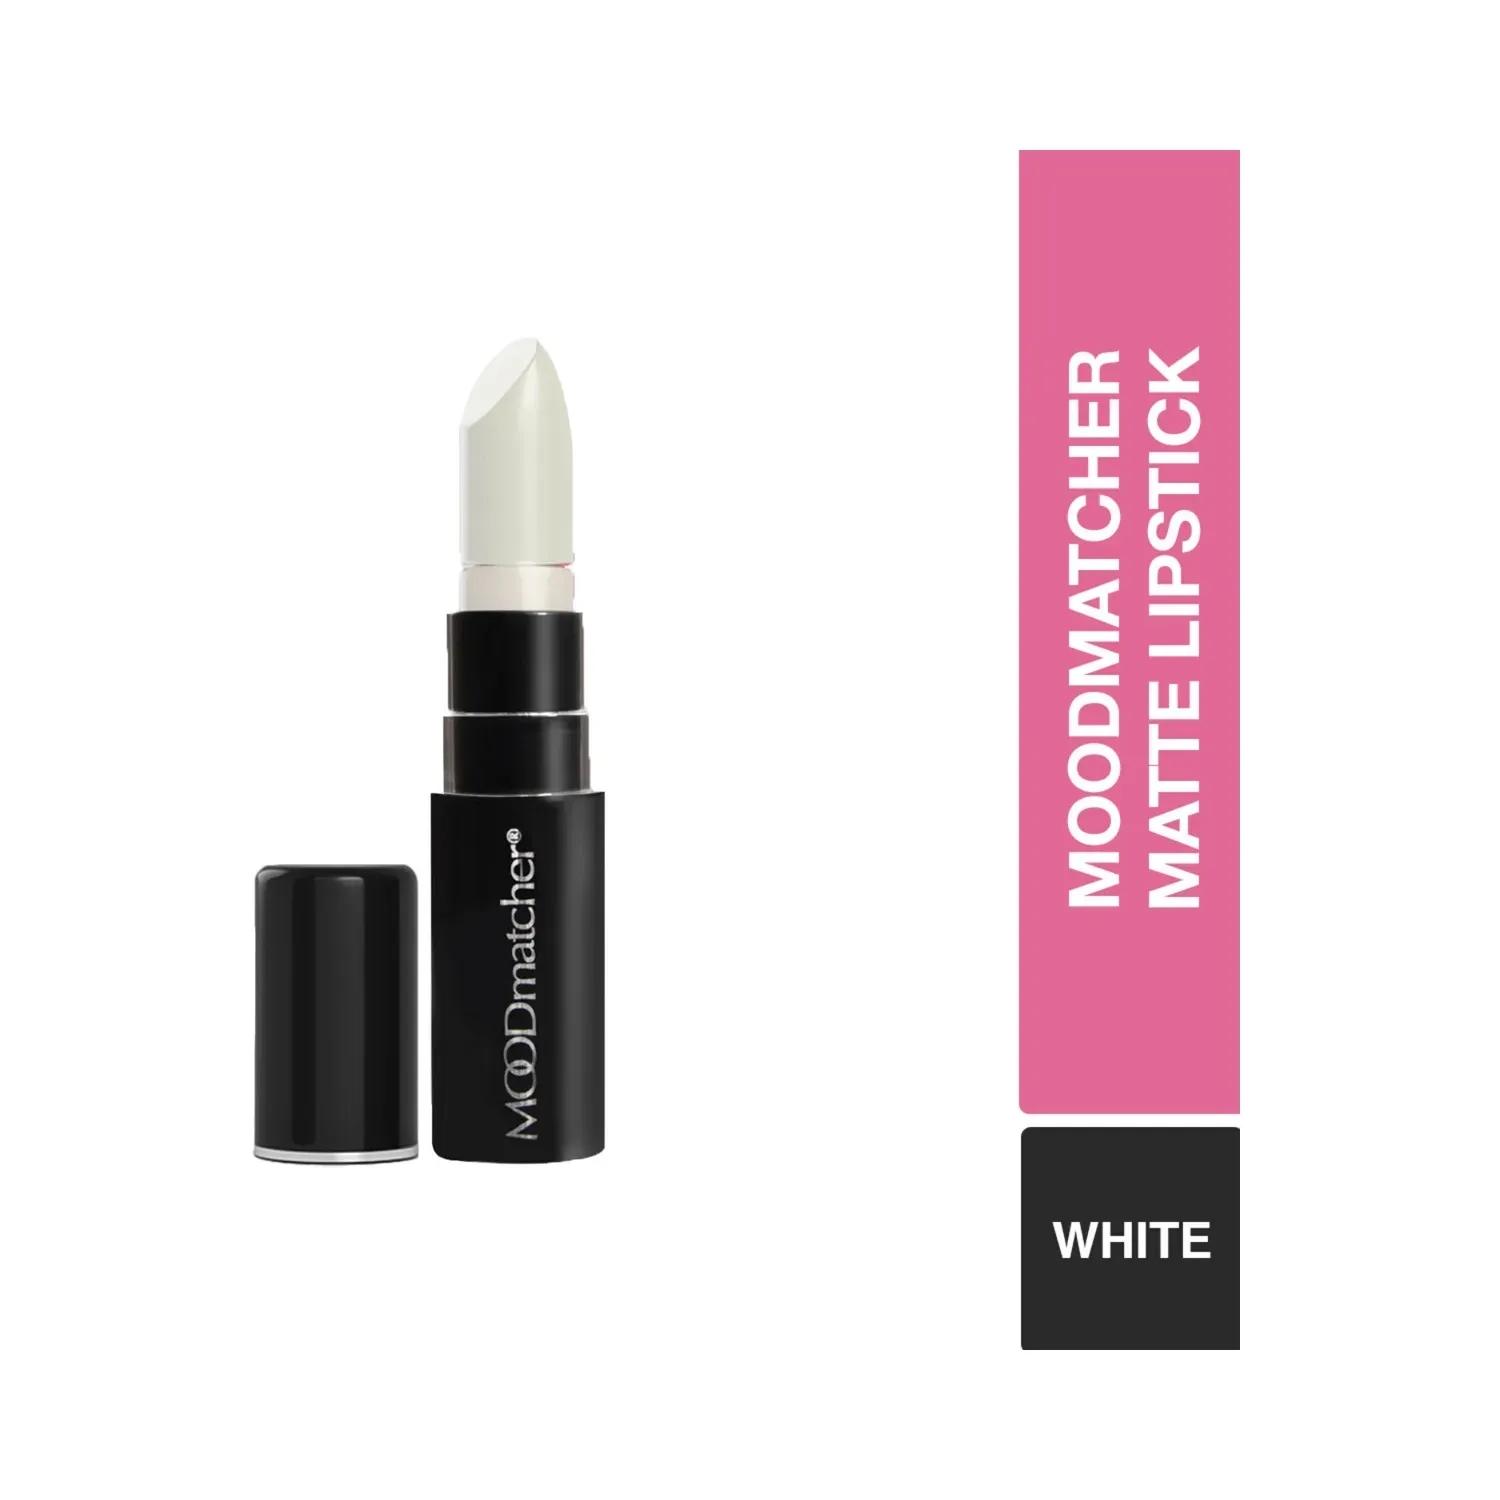 fran wilson moodmatcher lipstick - white (3.5g)